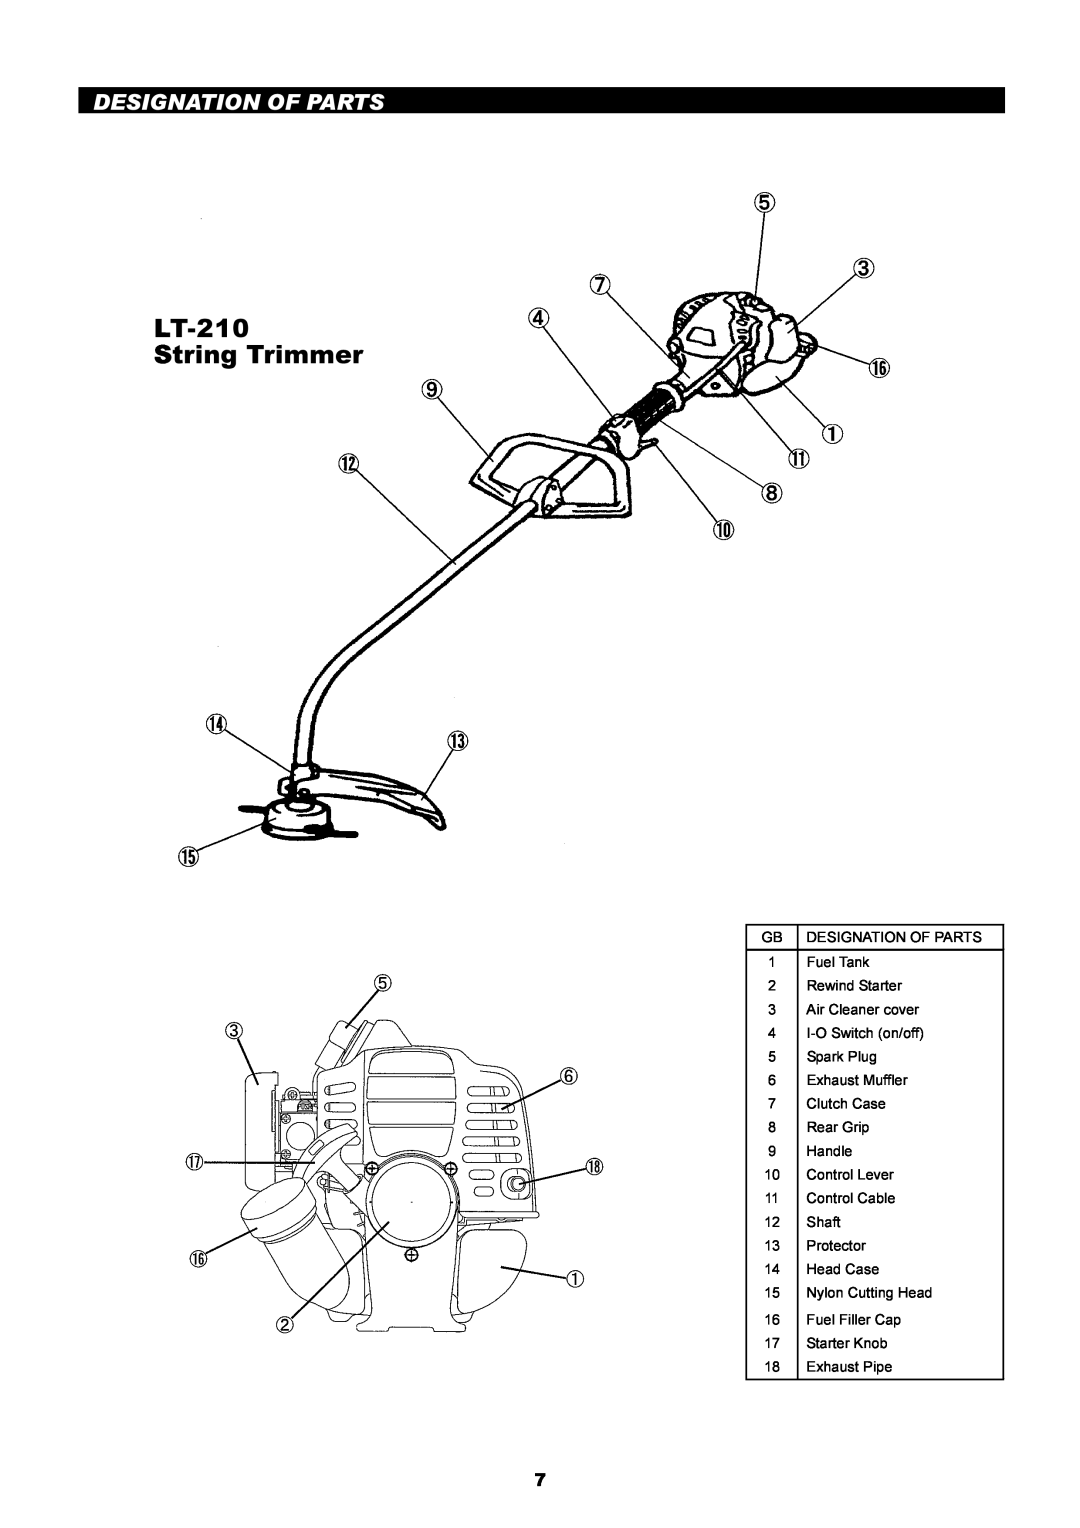 Makita instruction manual LT-210 String Trimmer, Designation Of Parts 